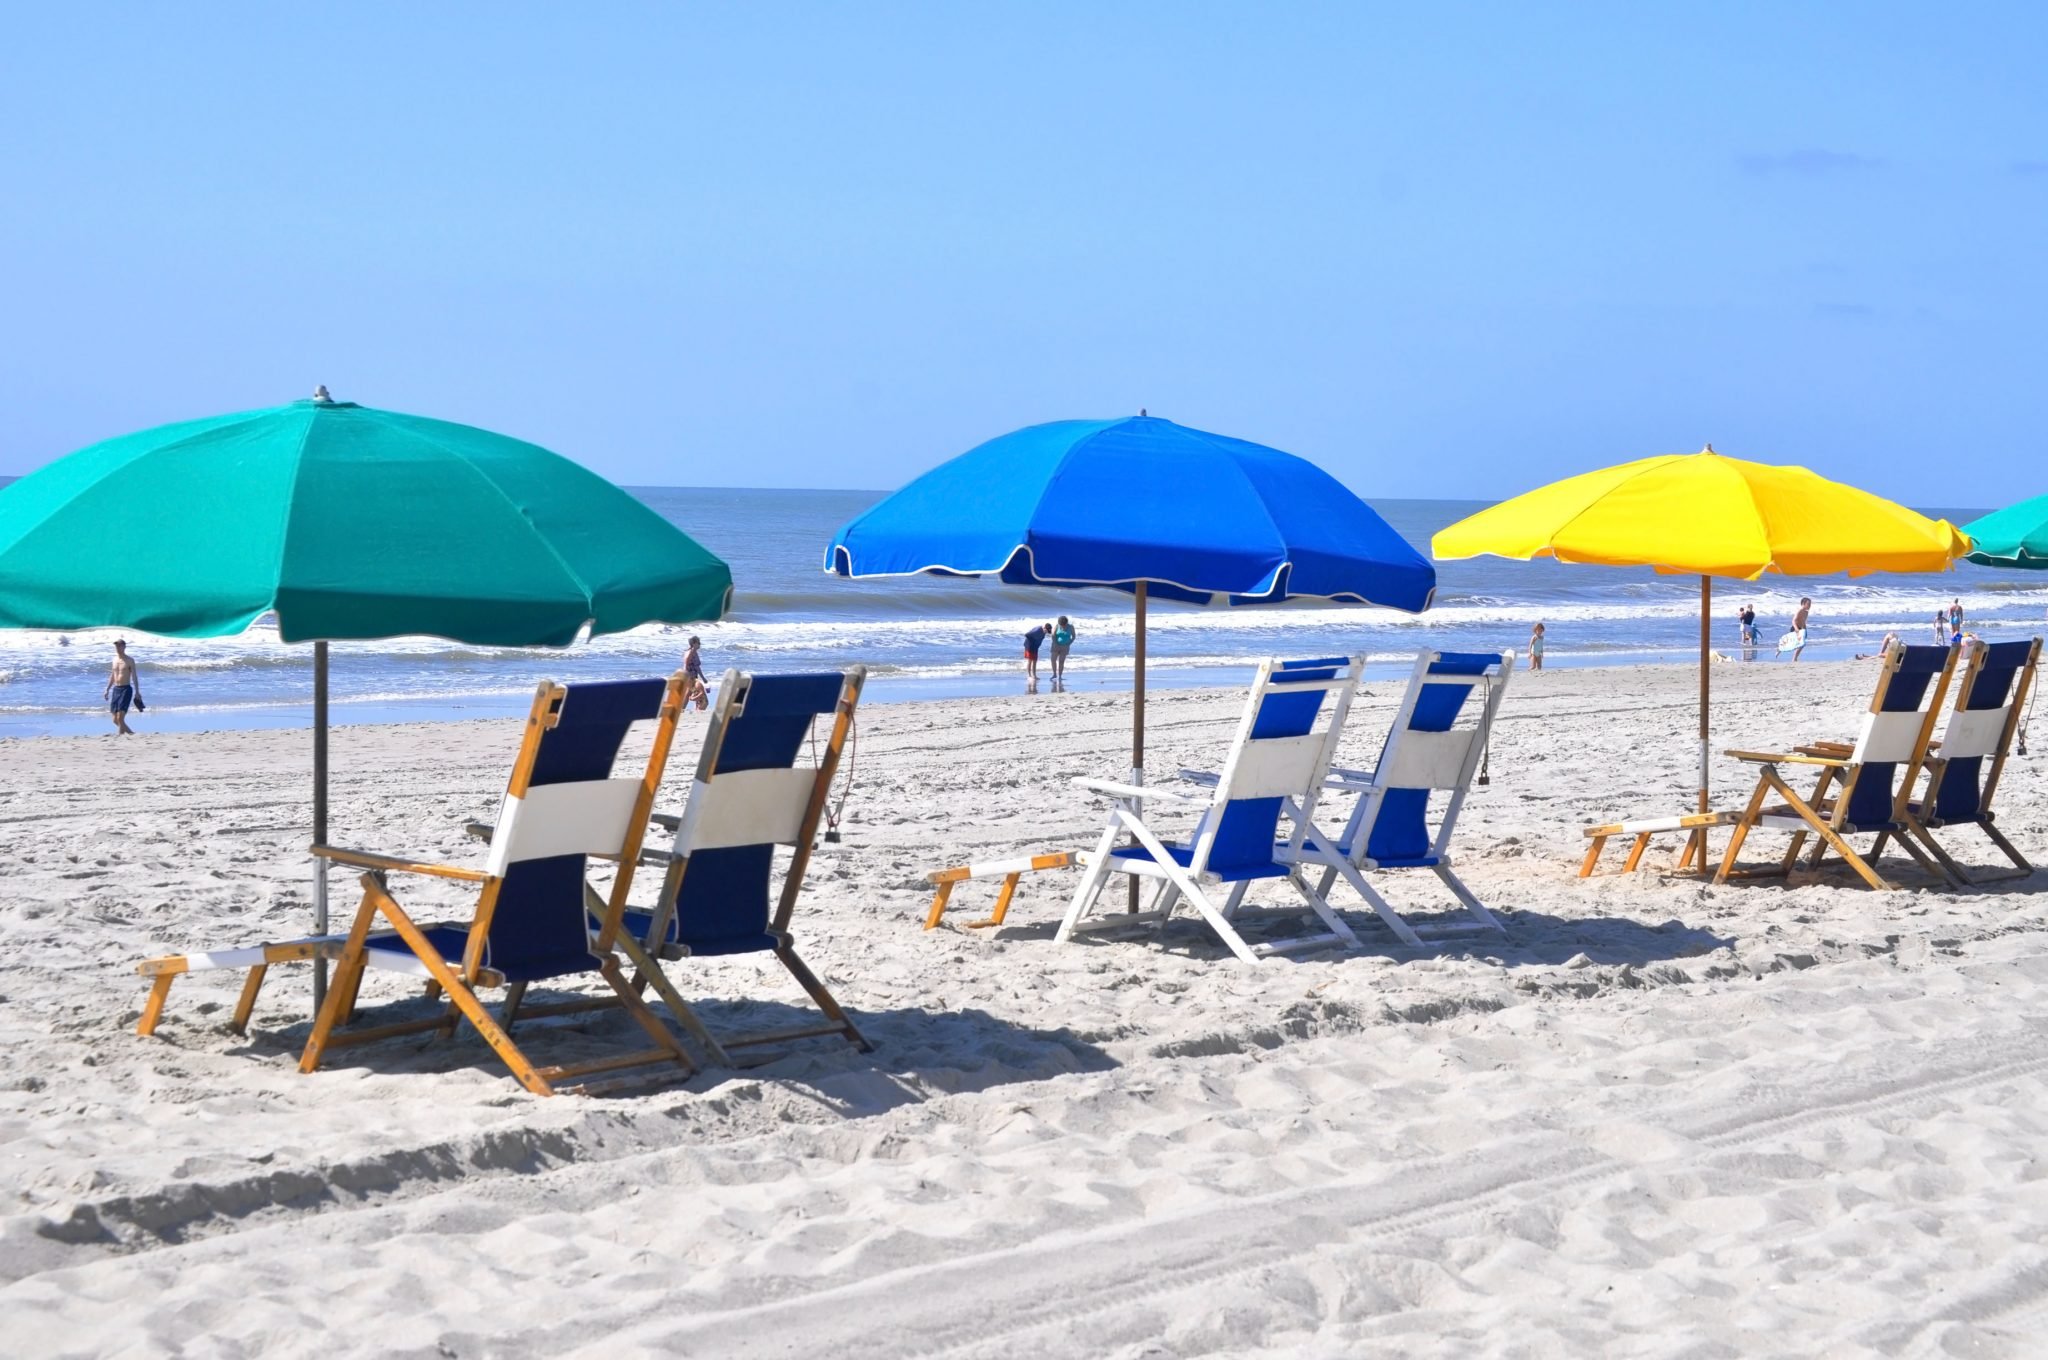 Beach chairs with Umbrellas on beach.